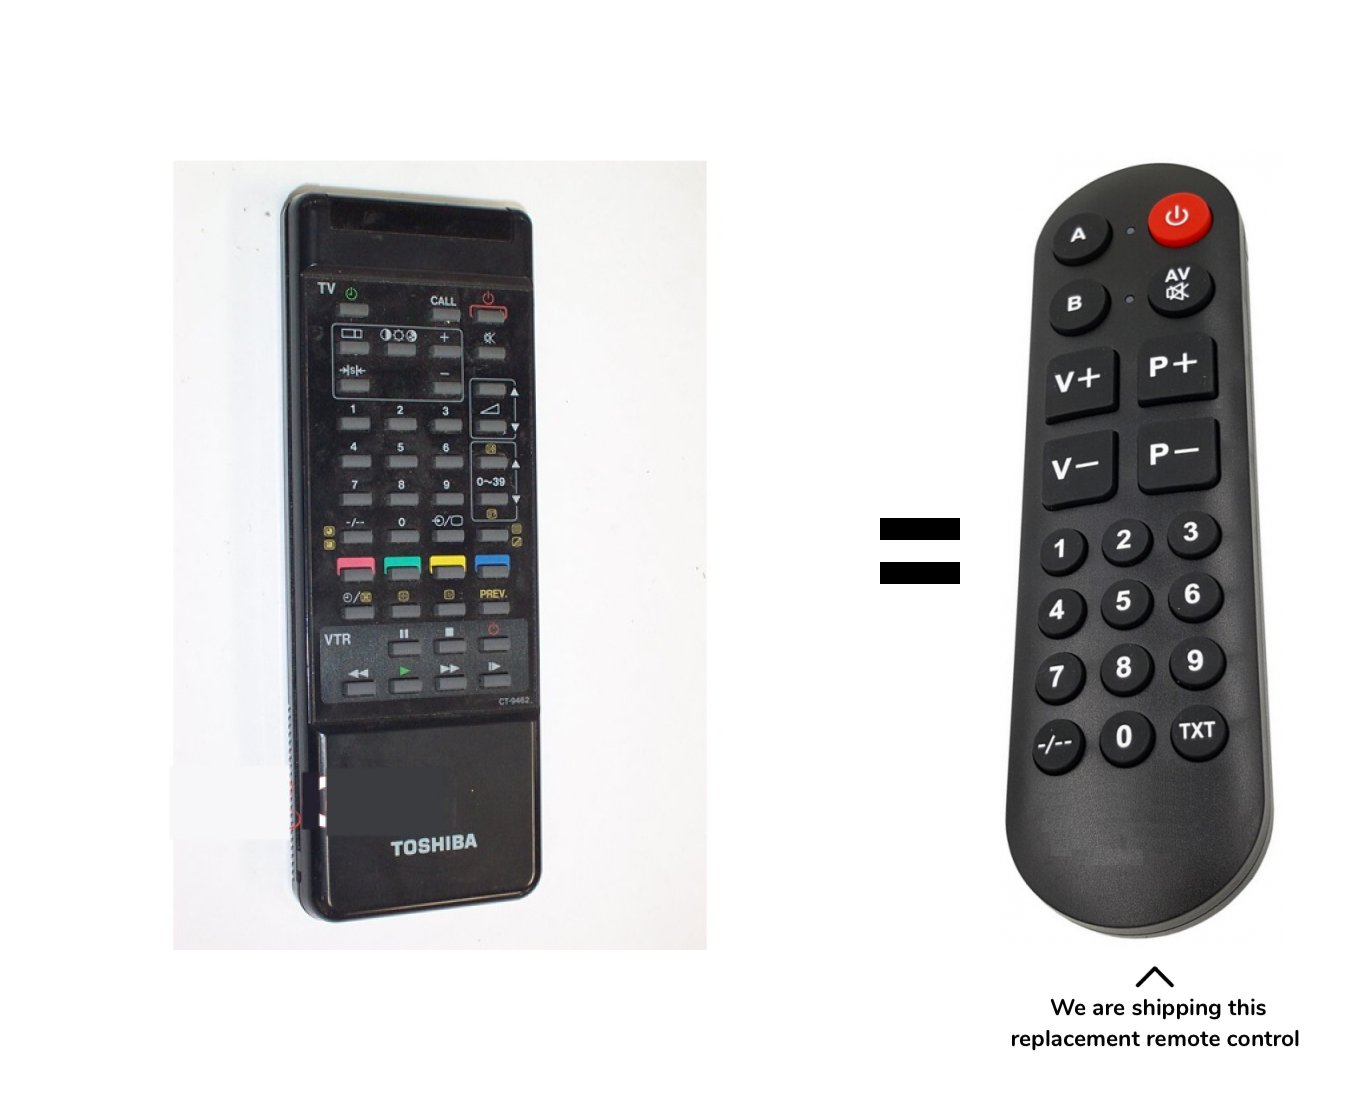 Toshiba 1480RD remote control for seniors